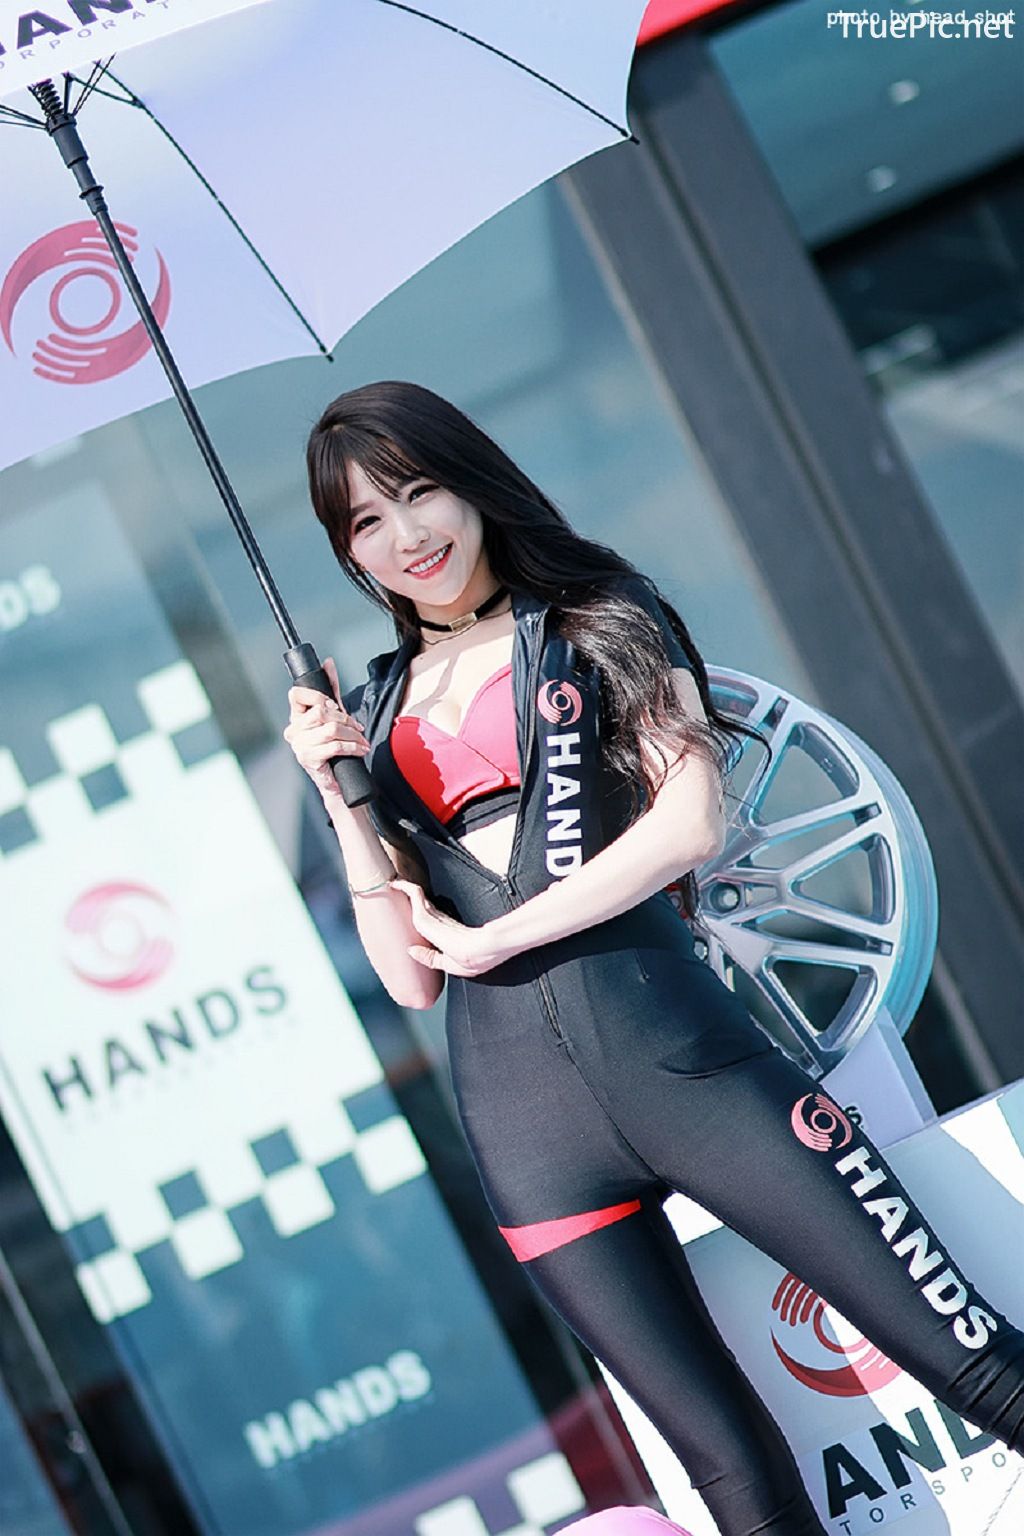 Image-Korean-Racing-Model-Lee-Eun-Hye-At-Incheon-Korea-Tuning-Festival-TruePic.net- Picture-122